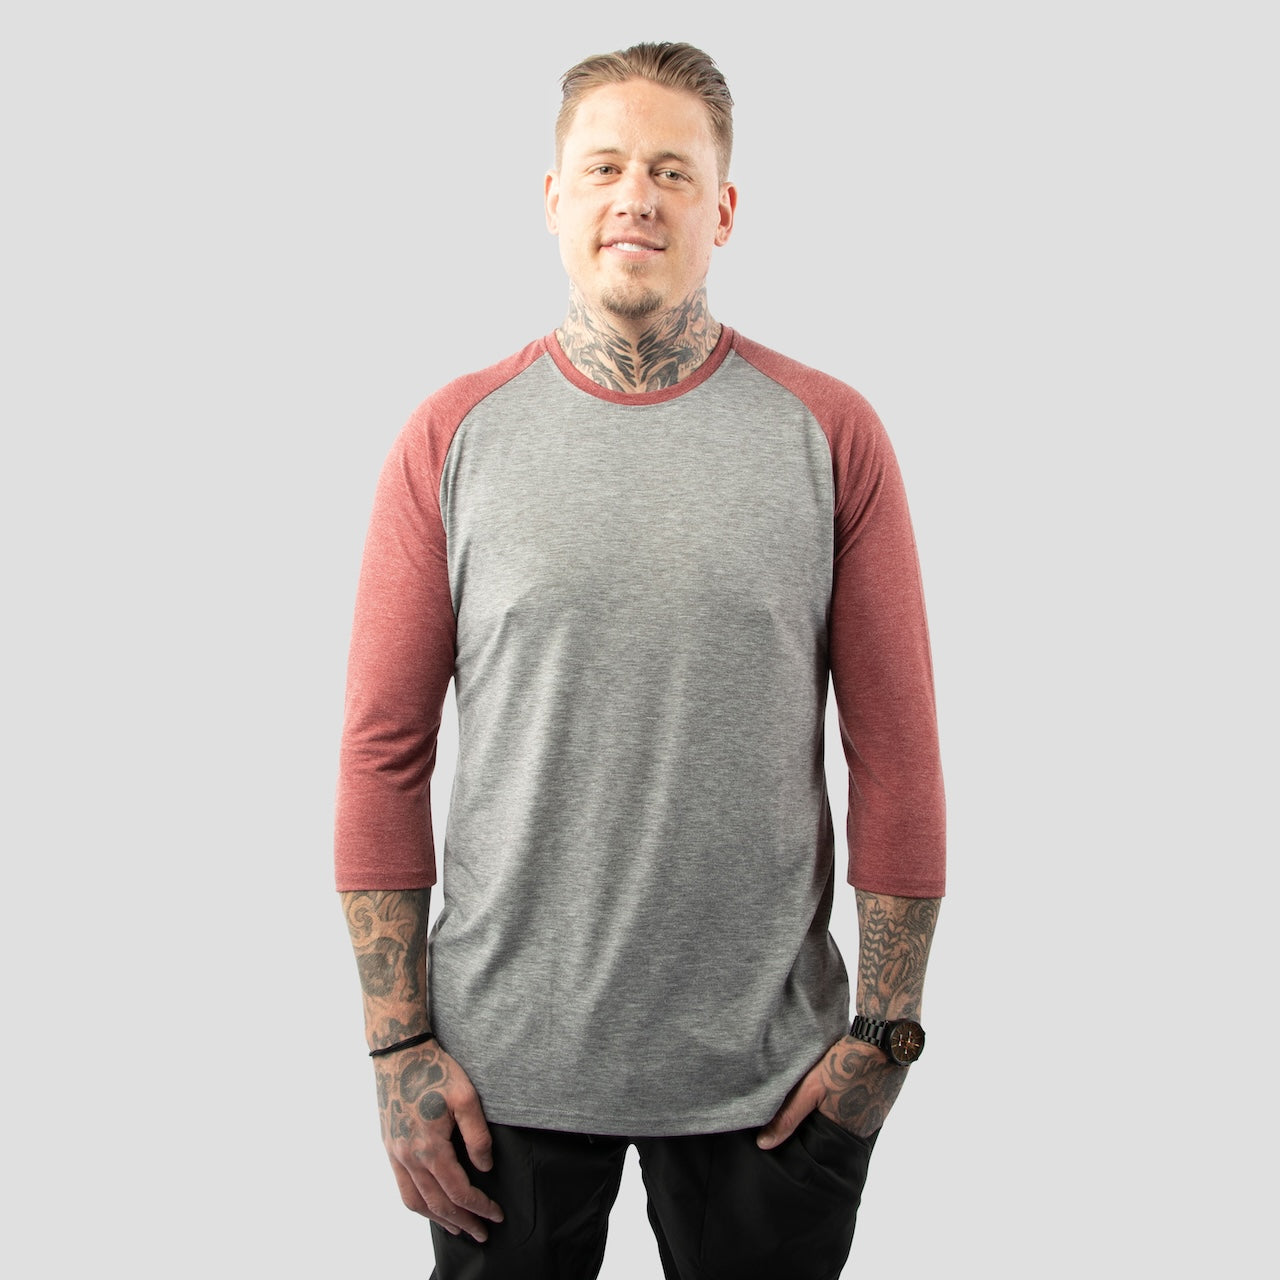 Gray and Red Raglan 3/4 Sleeve Shirt For Tall Slim Men